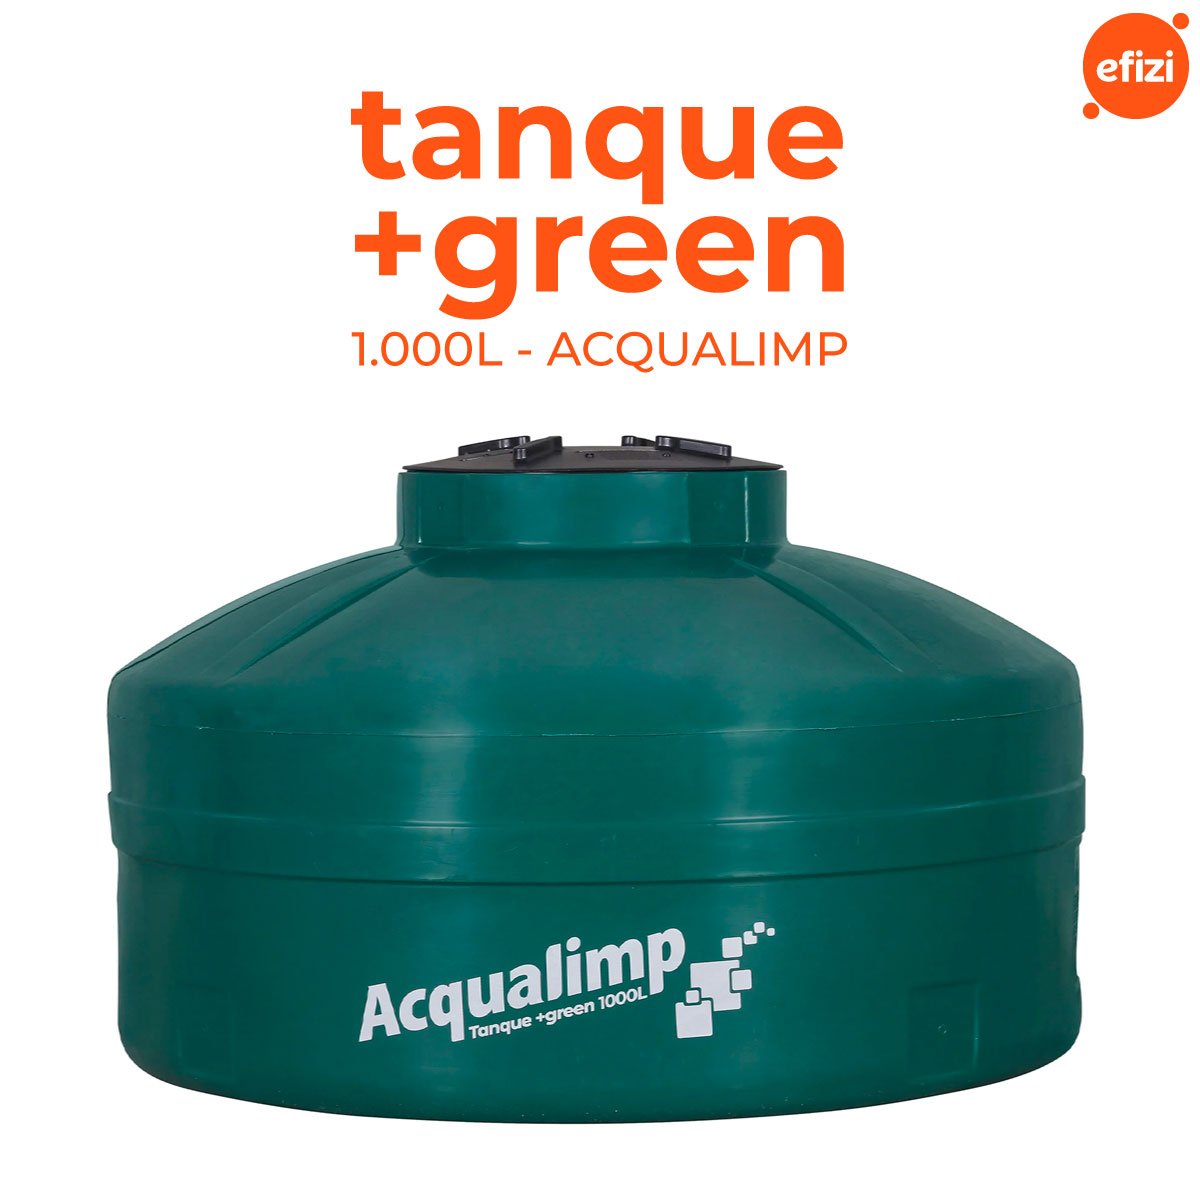 Tanque Green+ 1000l - Acqualimp - 2